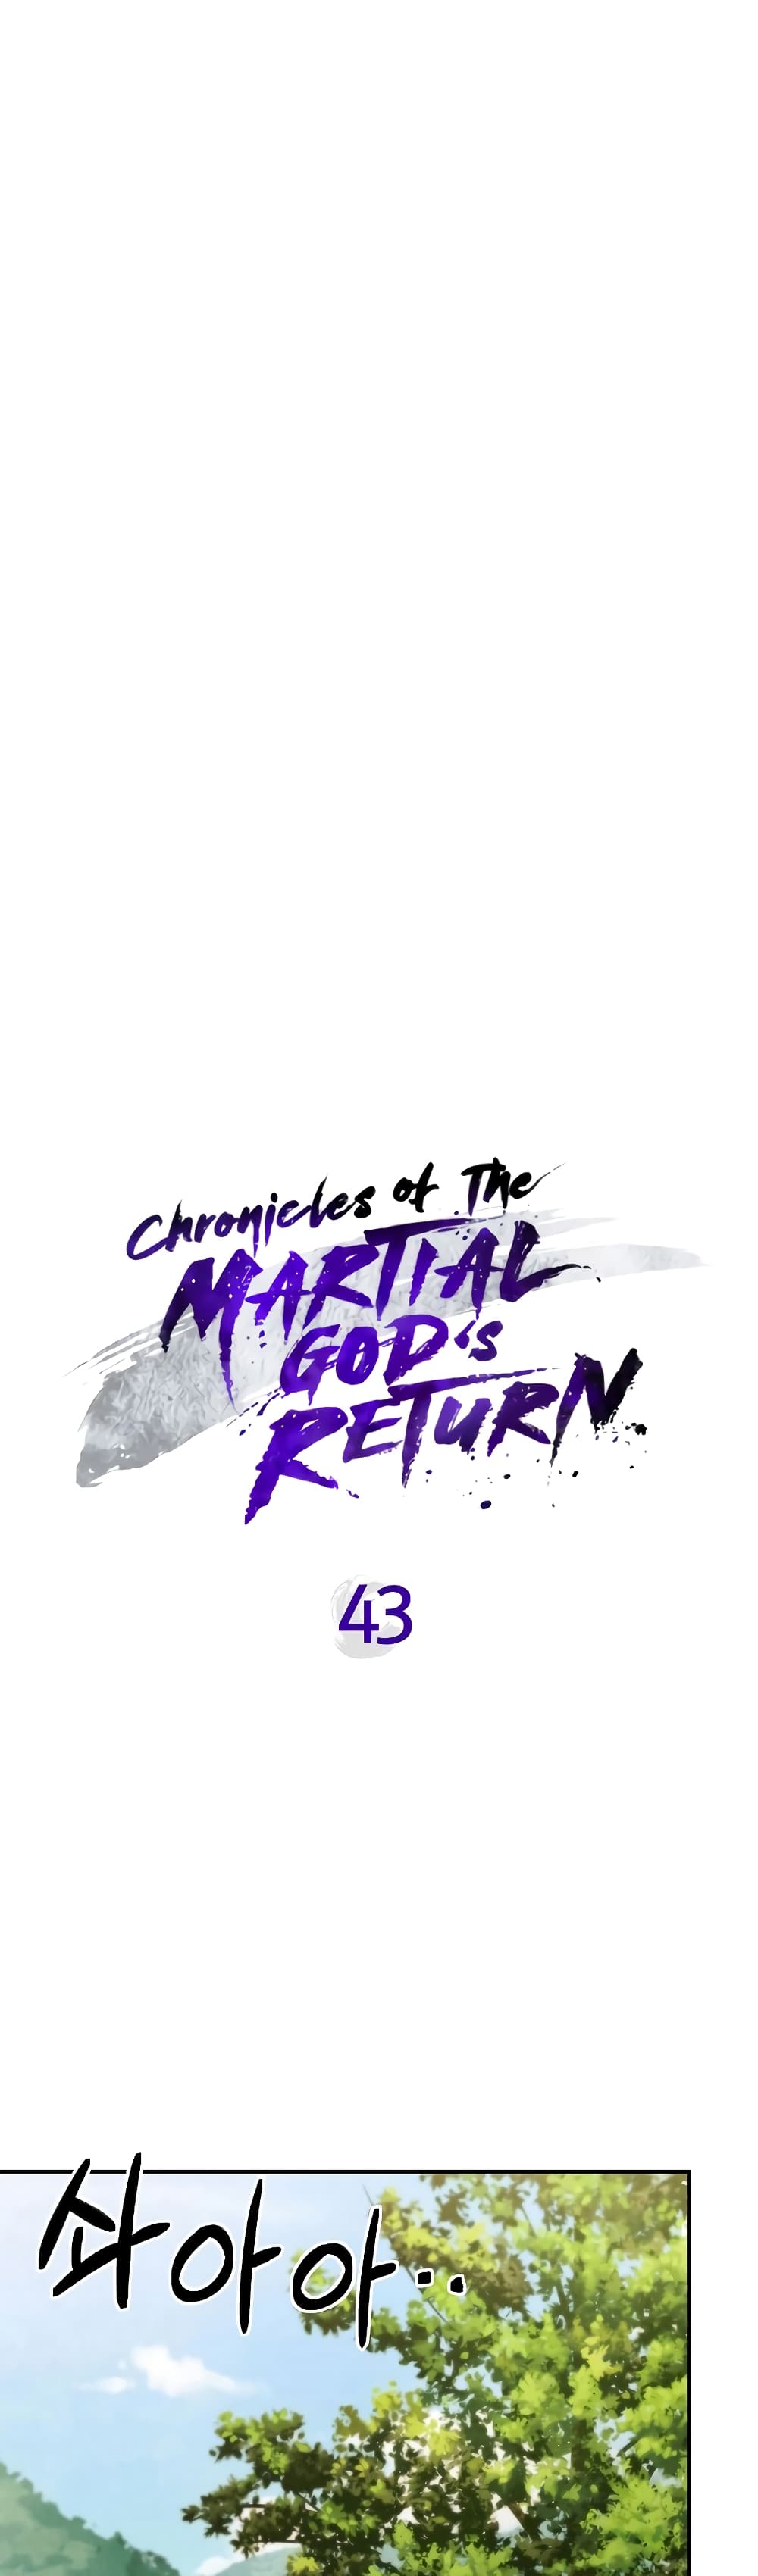 Chronicles Of The Martial God's Return 43-43